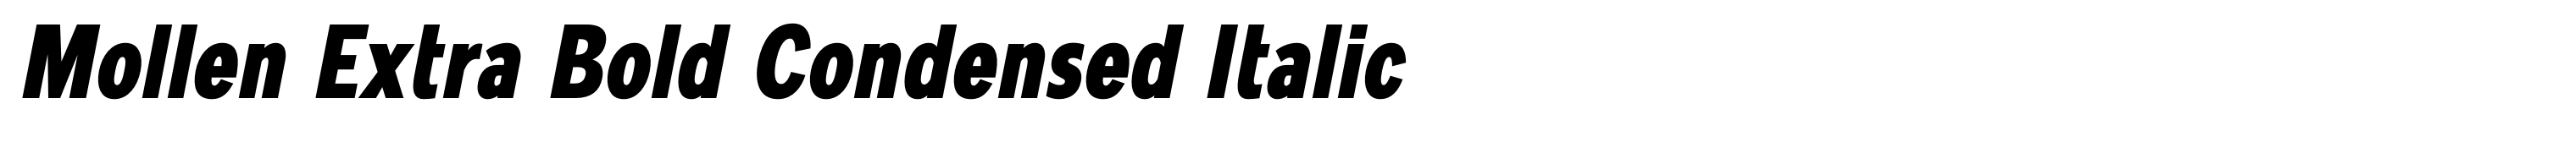 Mollen Extra Bold Condensed Italic